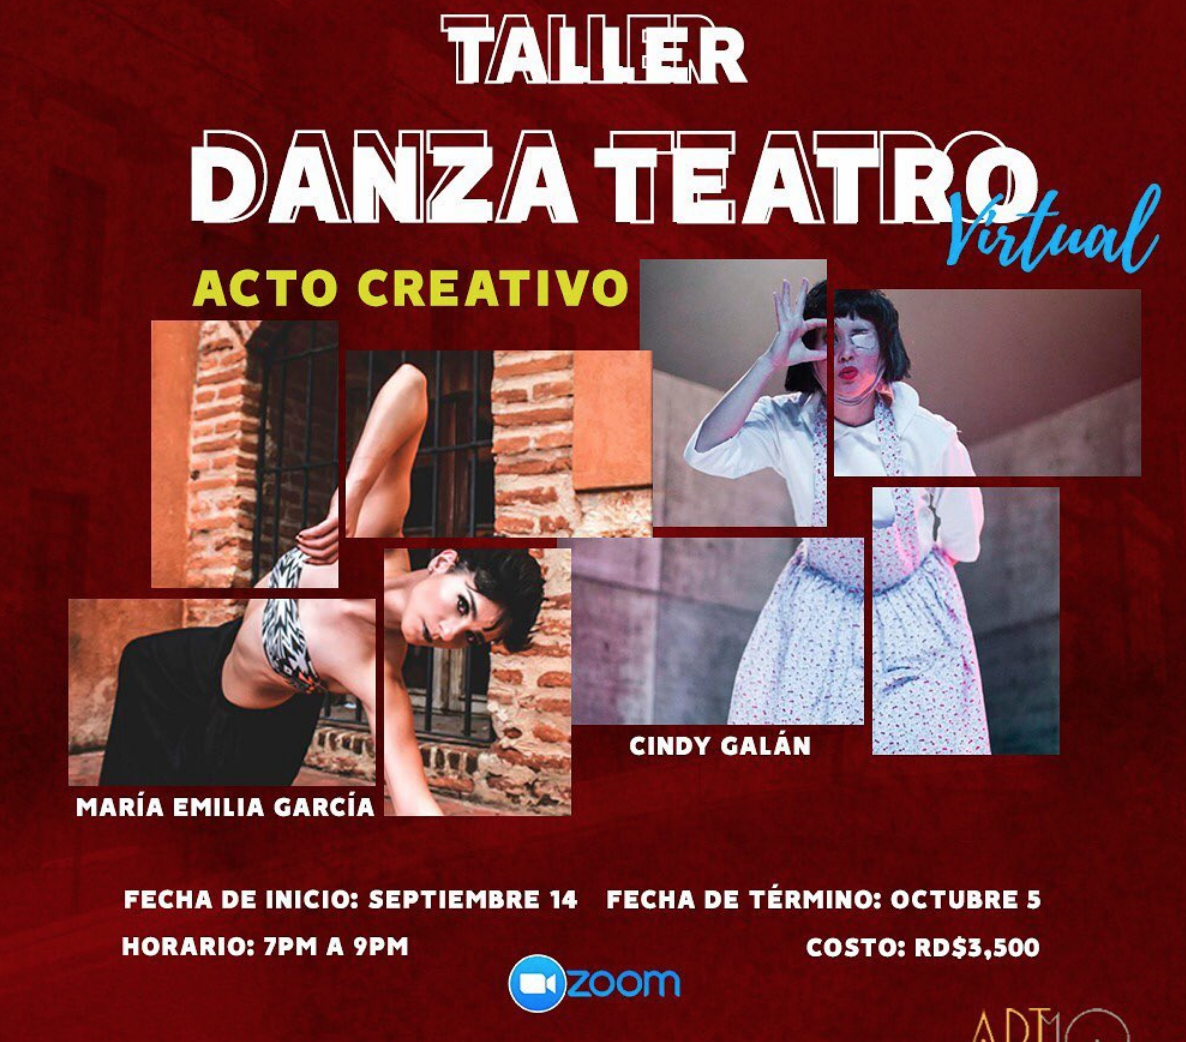 Artistas dominicanas invitan a Acto Creativo, taller online de danza teatro